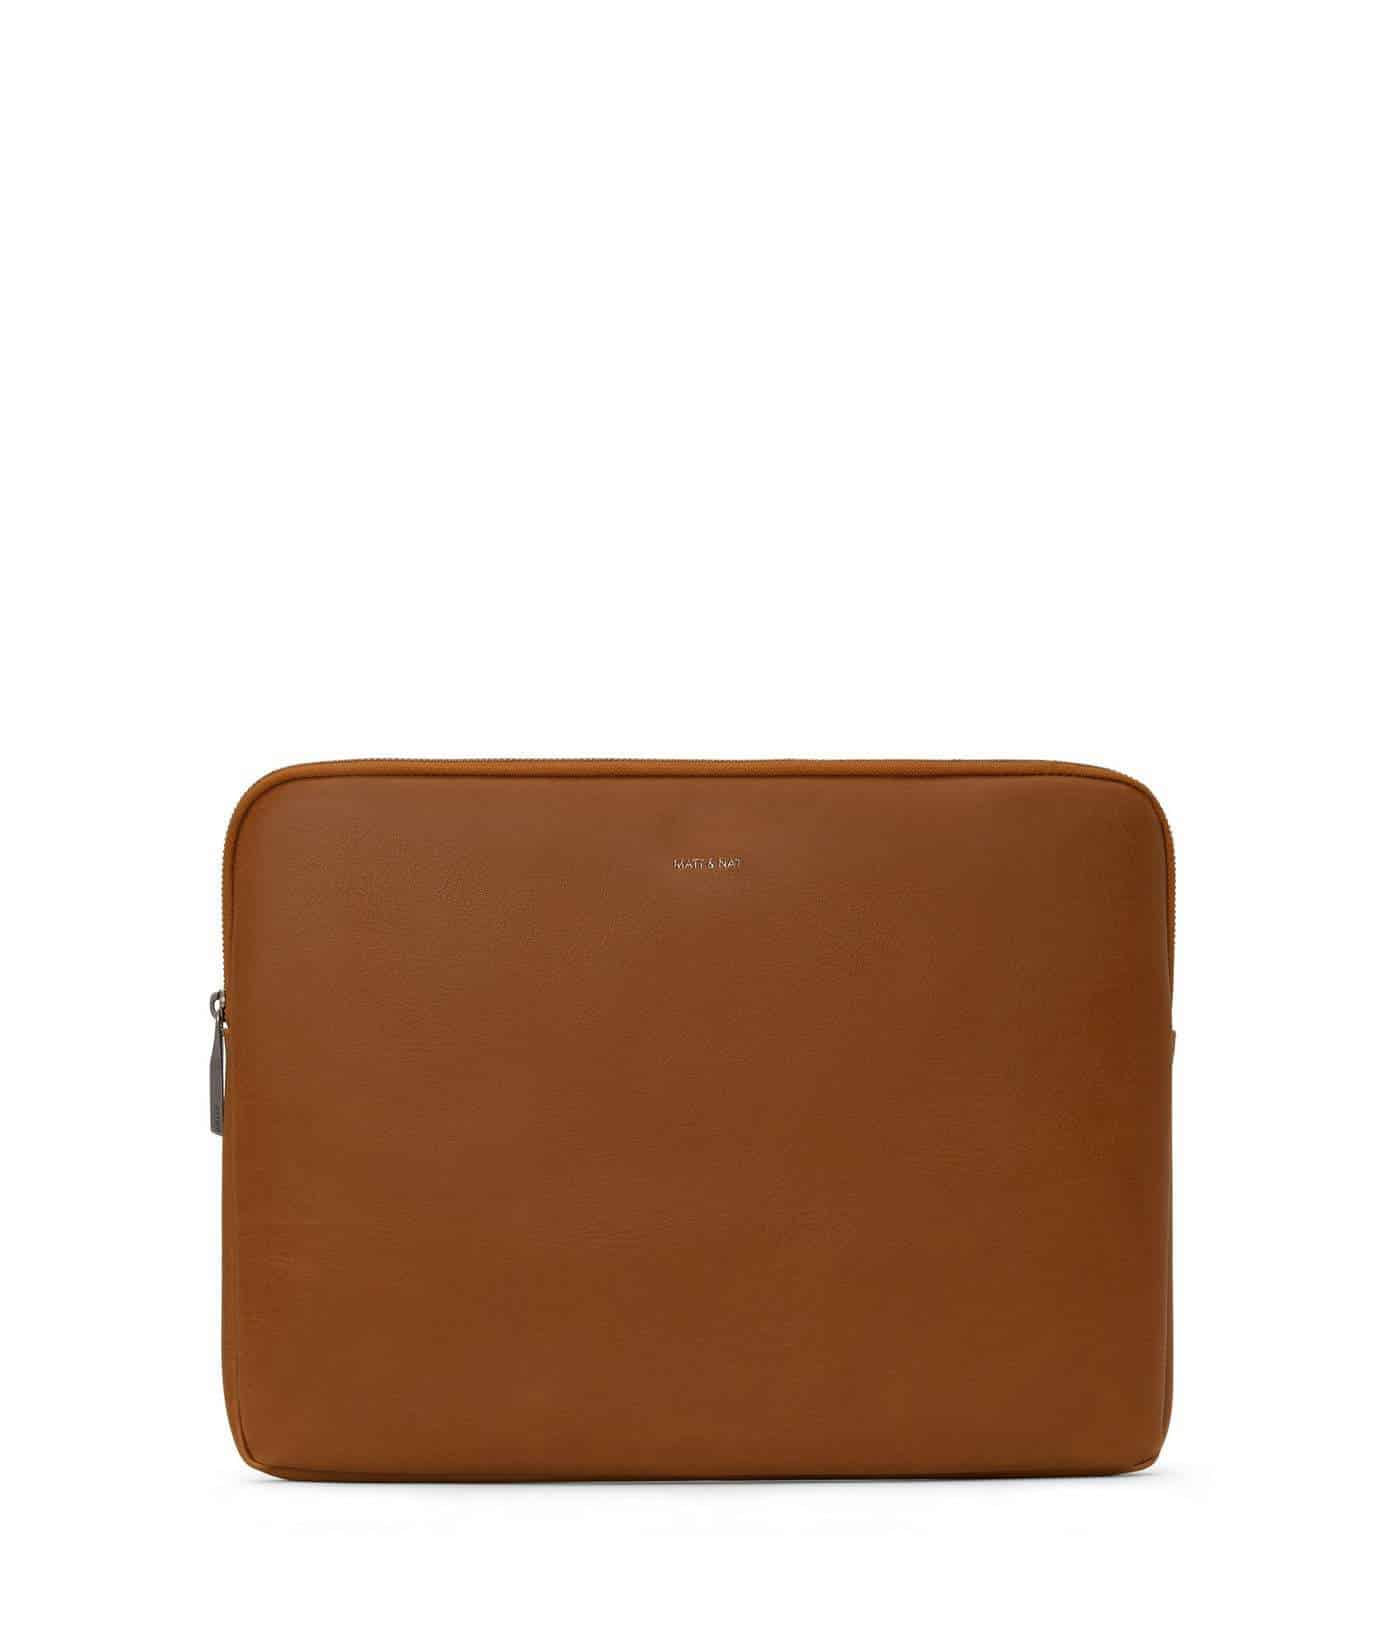 Brown vegan leather laptop sleeve